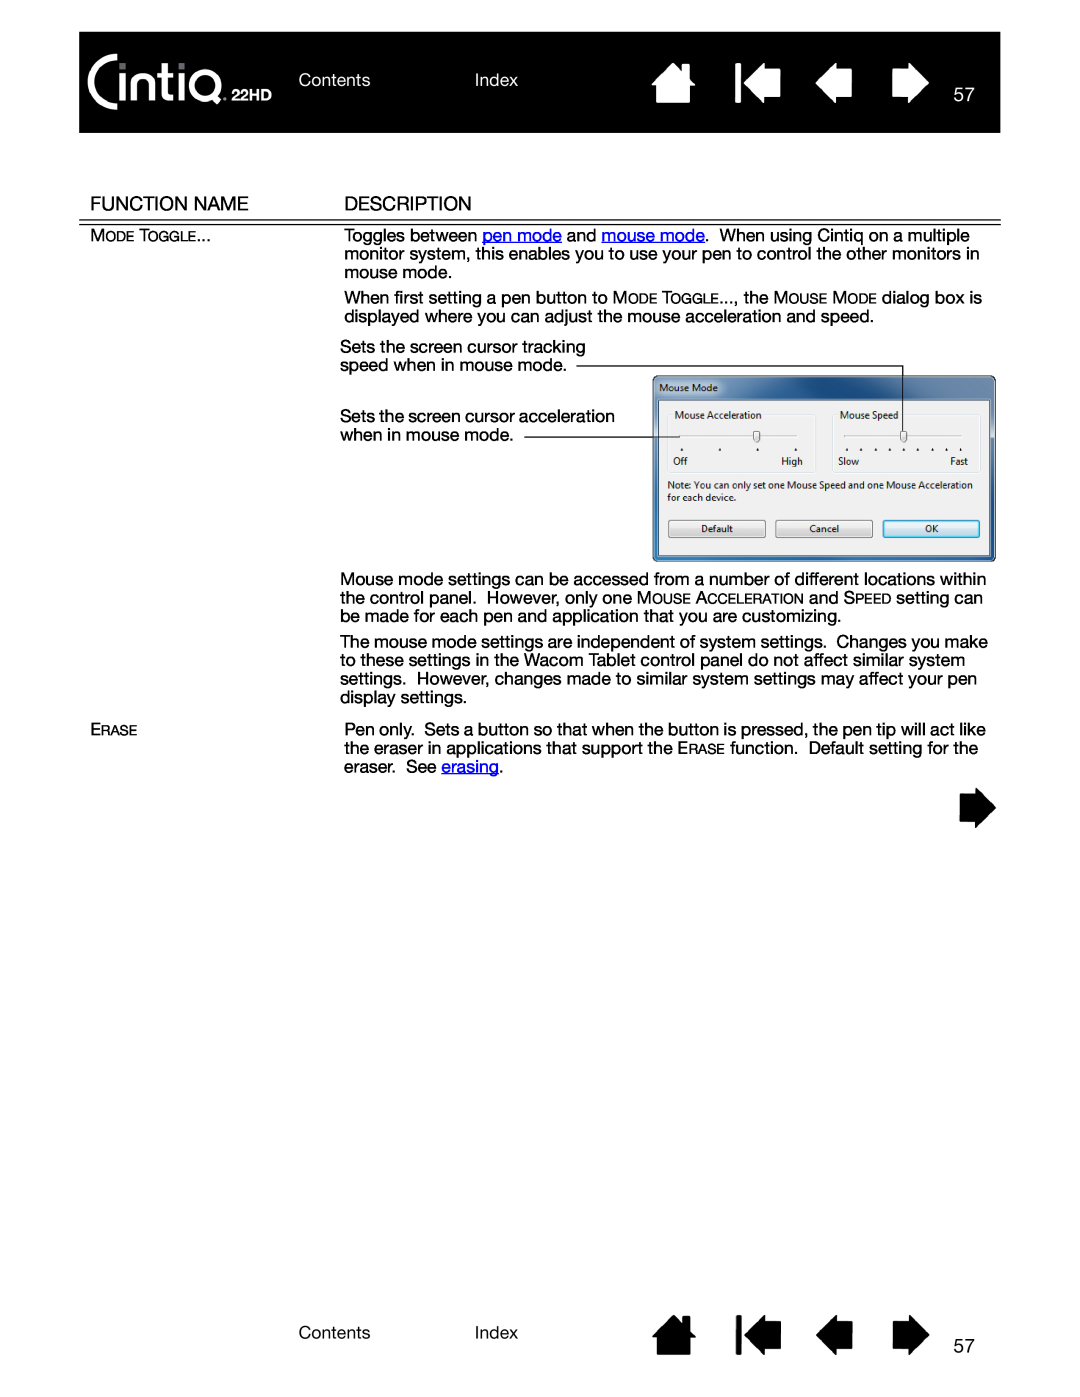 Wacom DTK-2200 user manual Function Name, Description, ContentsIndex, Mode Toggle, Erase 